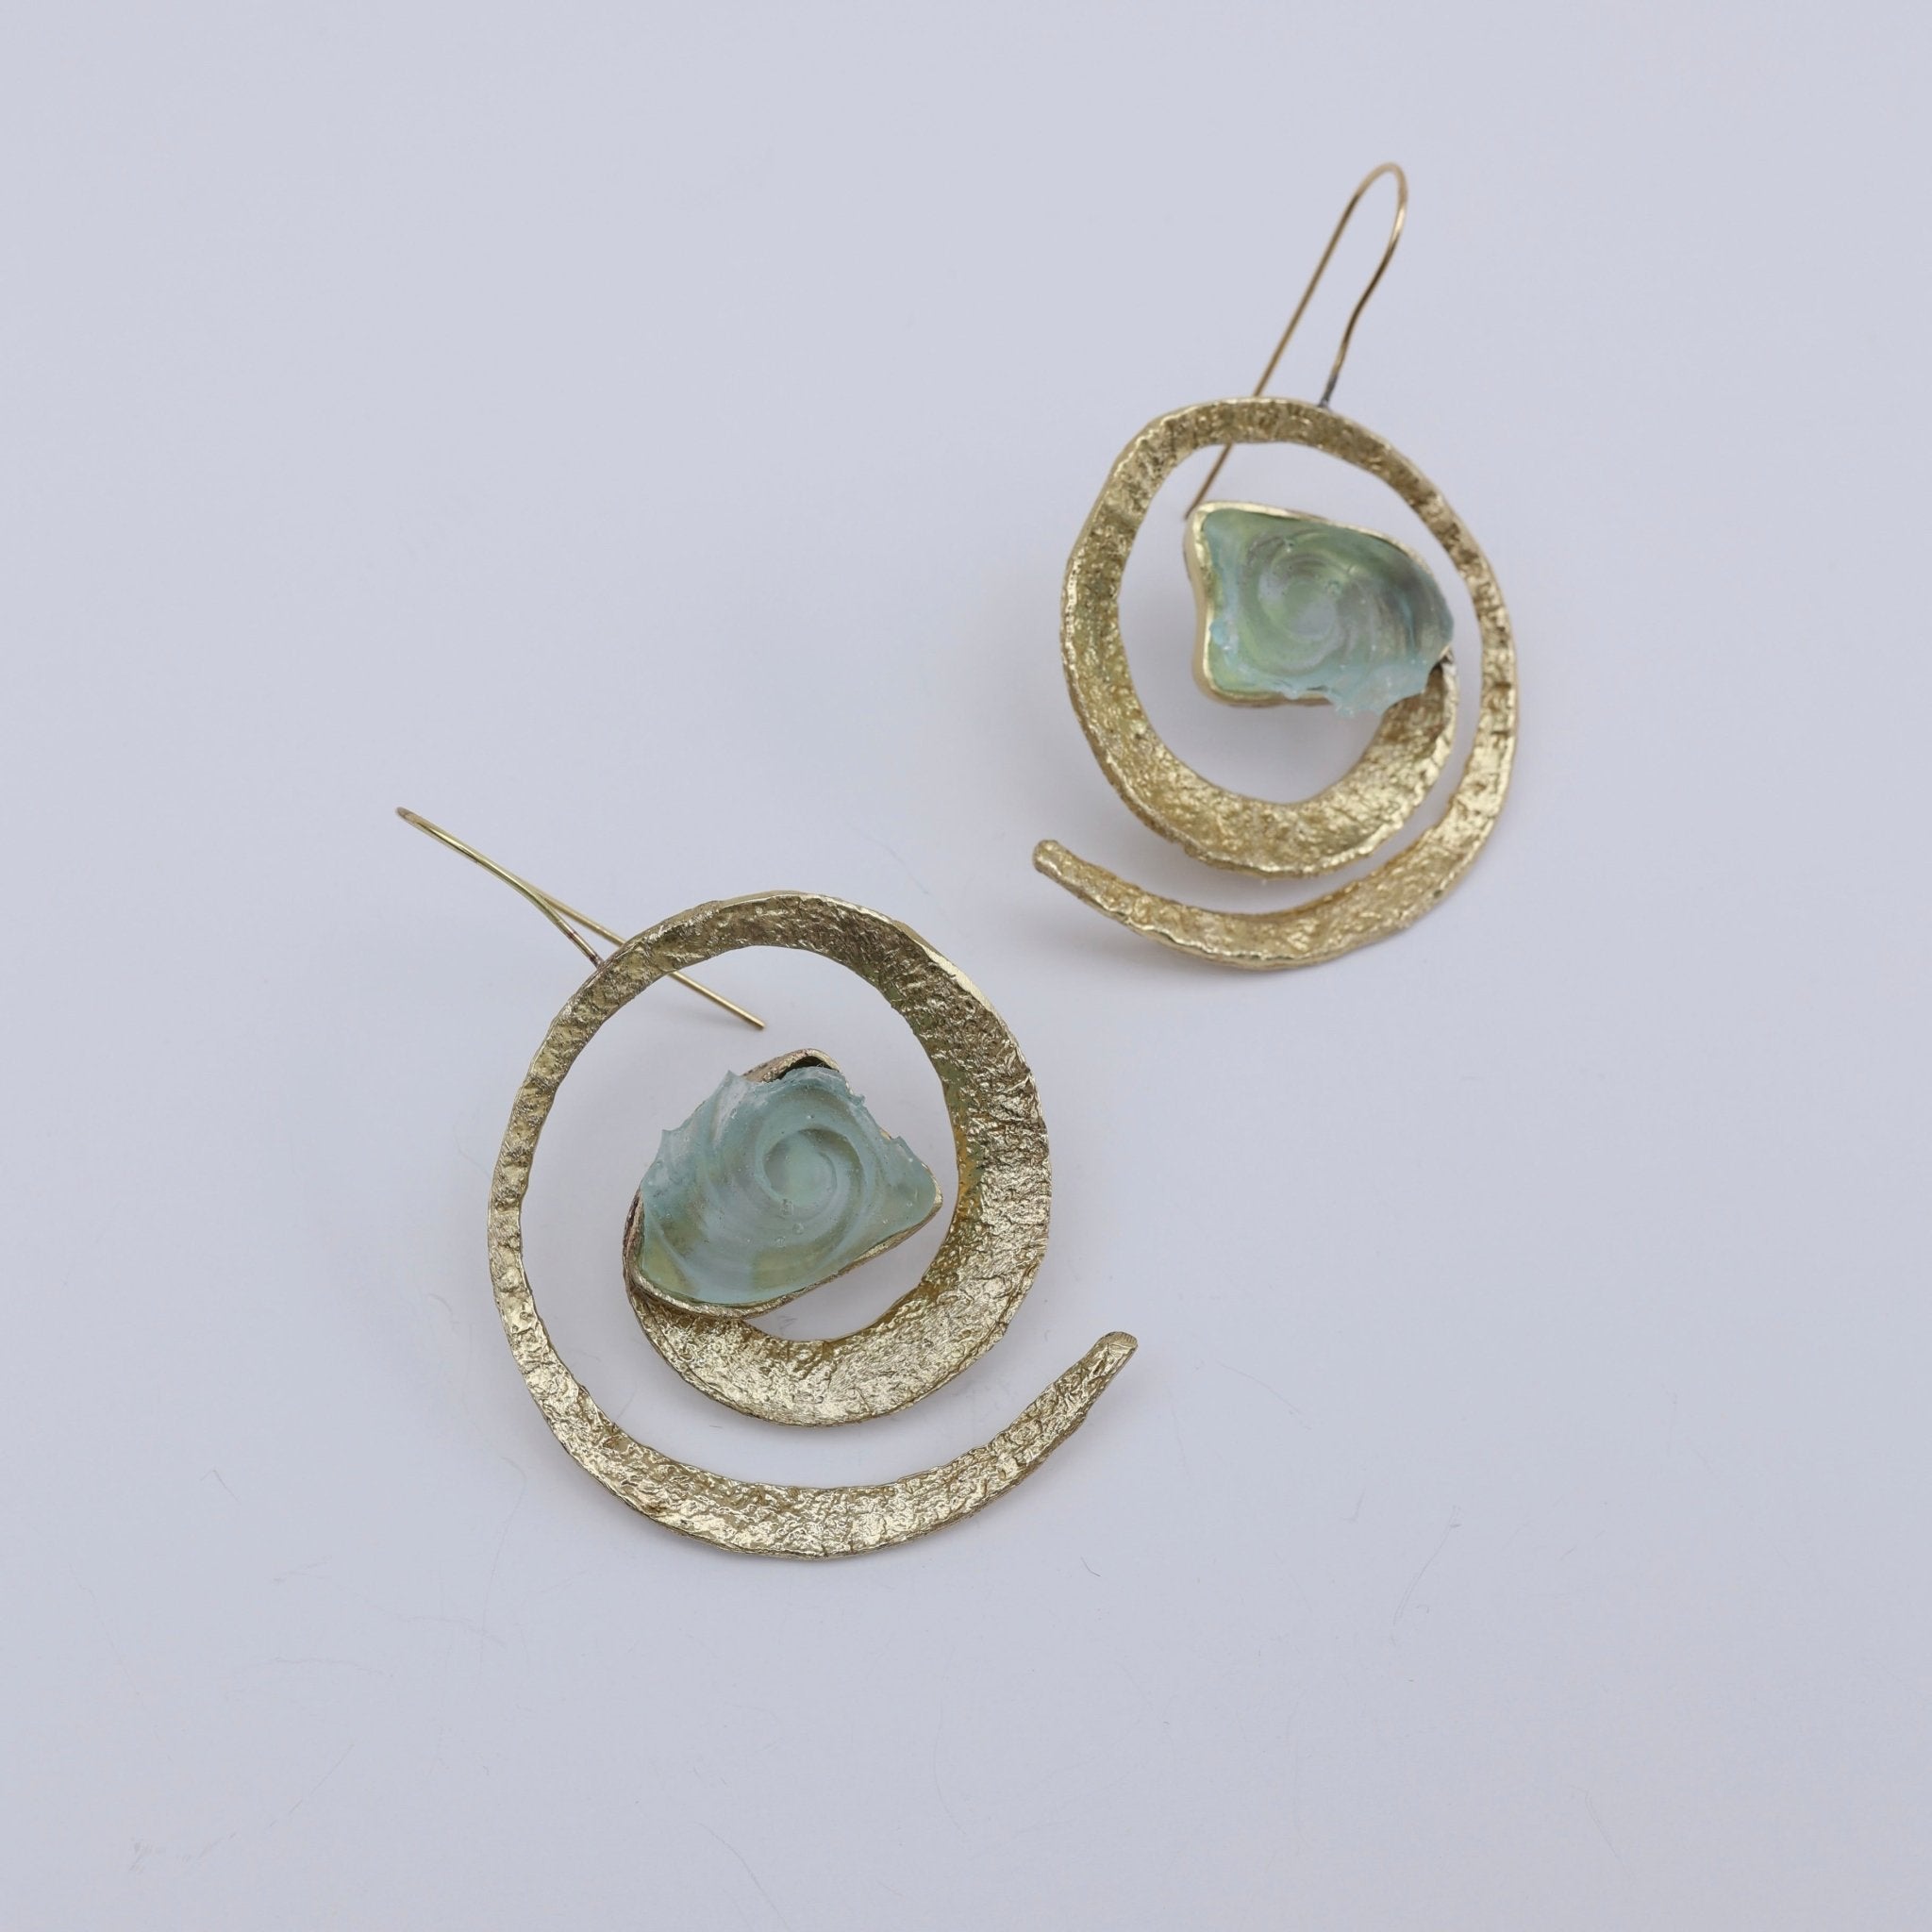 Aqua Resin Earrings - The Nancy Smillie Shop - Art, Jewellery & Designer Gifts Glasgow